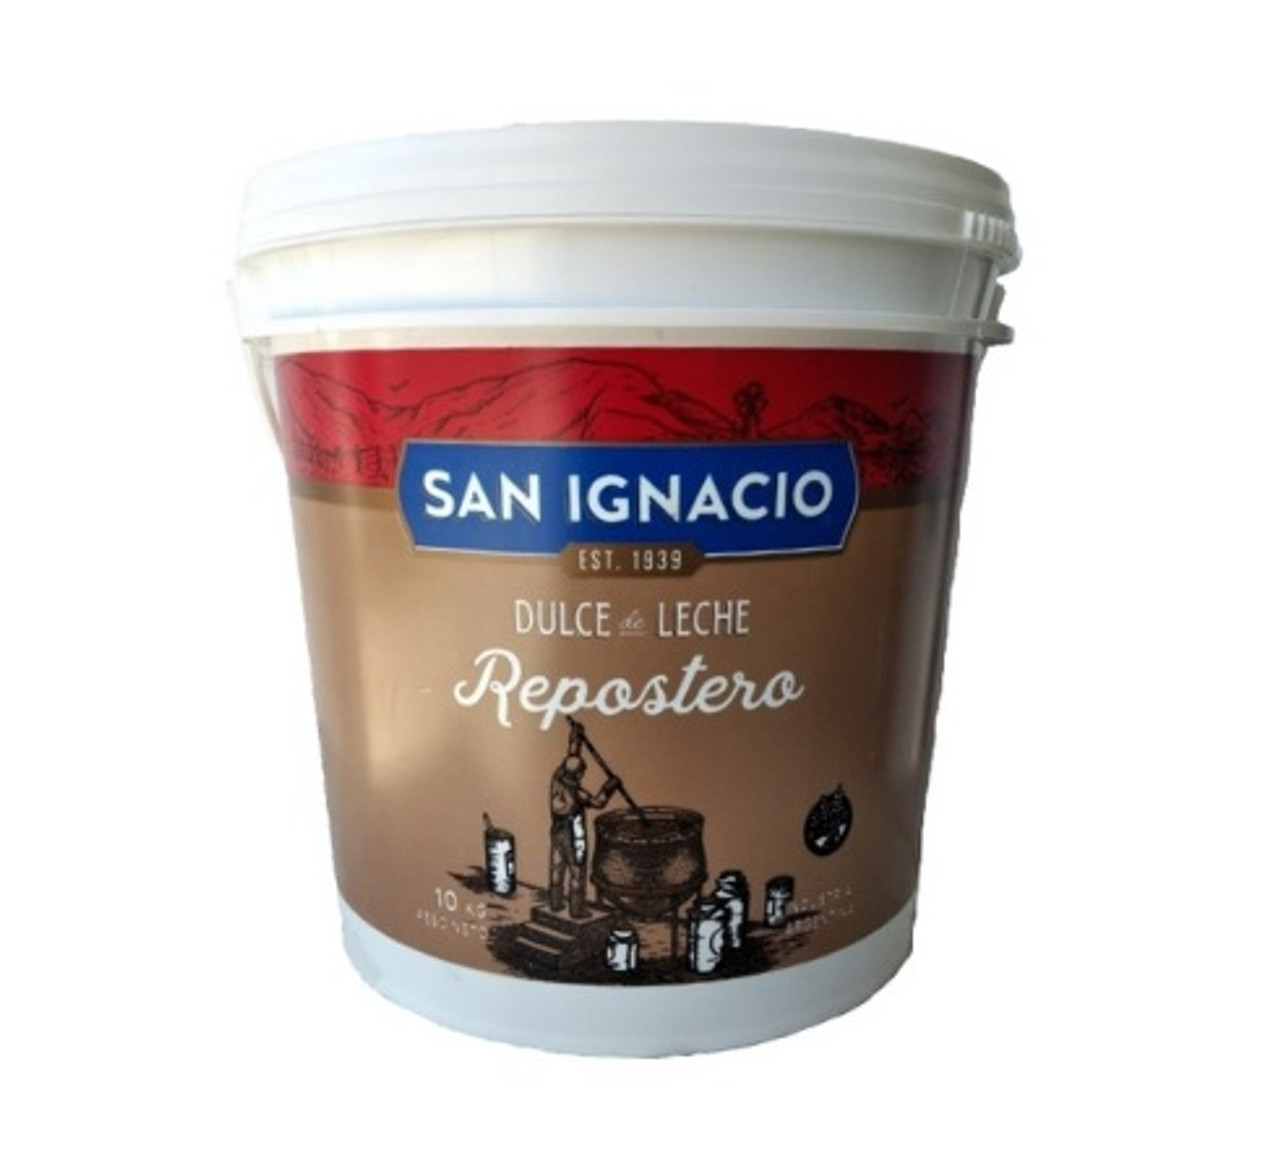 San Ignacio Dulce de Leche Repostero Thicker Perfect for Cakes, Bites,  Biscuits & Baking at Home, 400 g / 14.1 oz